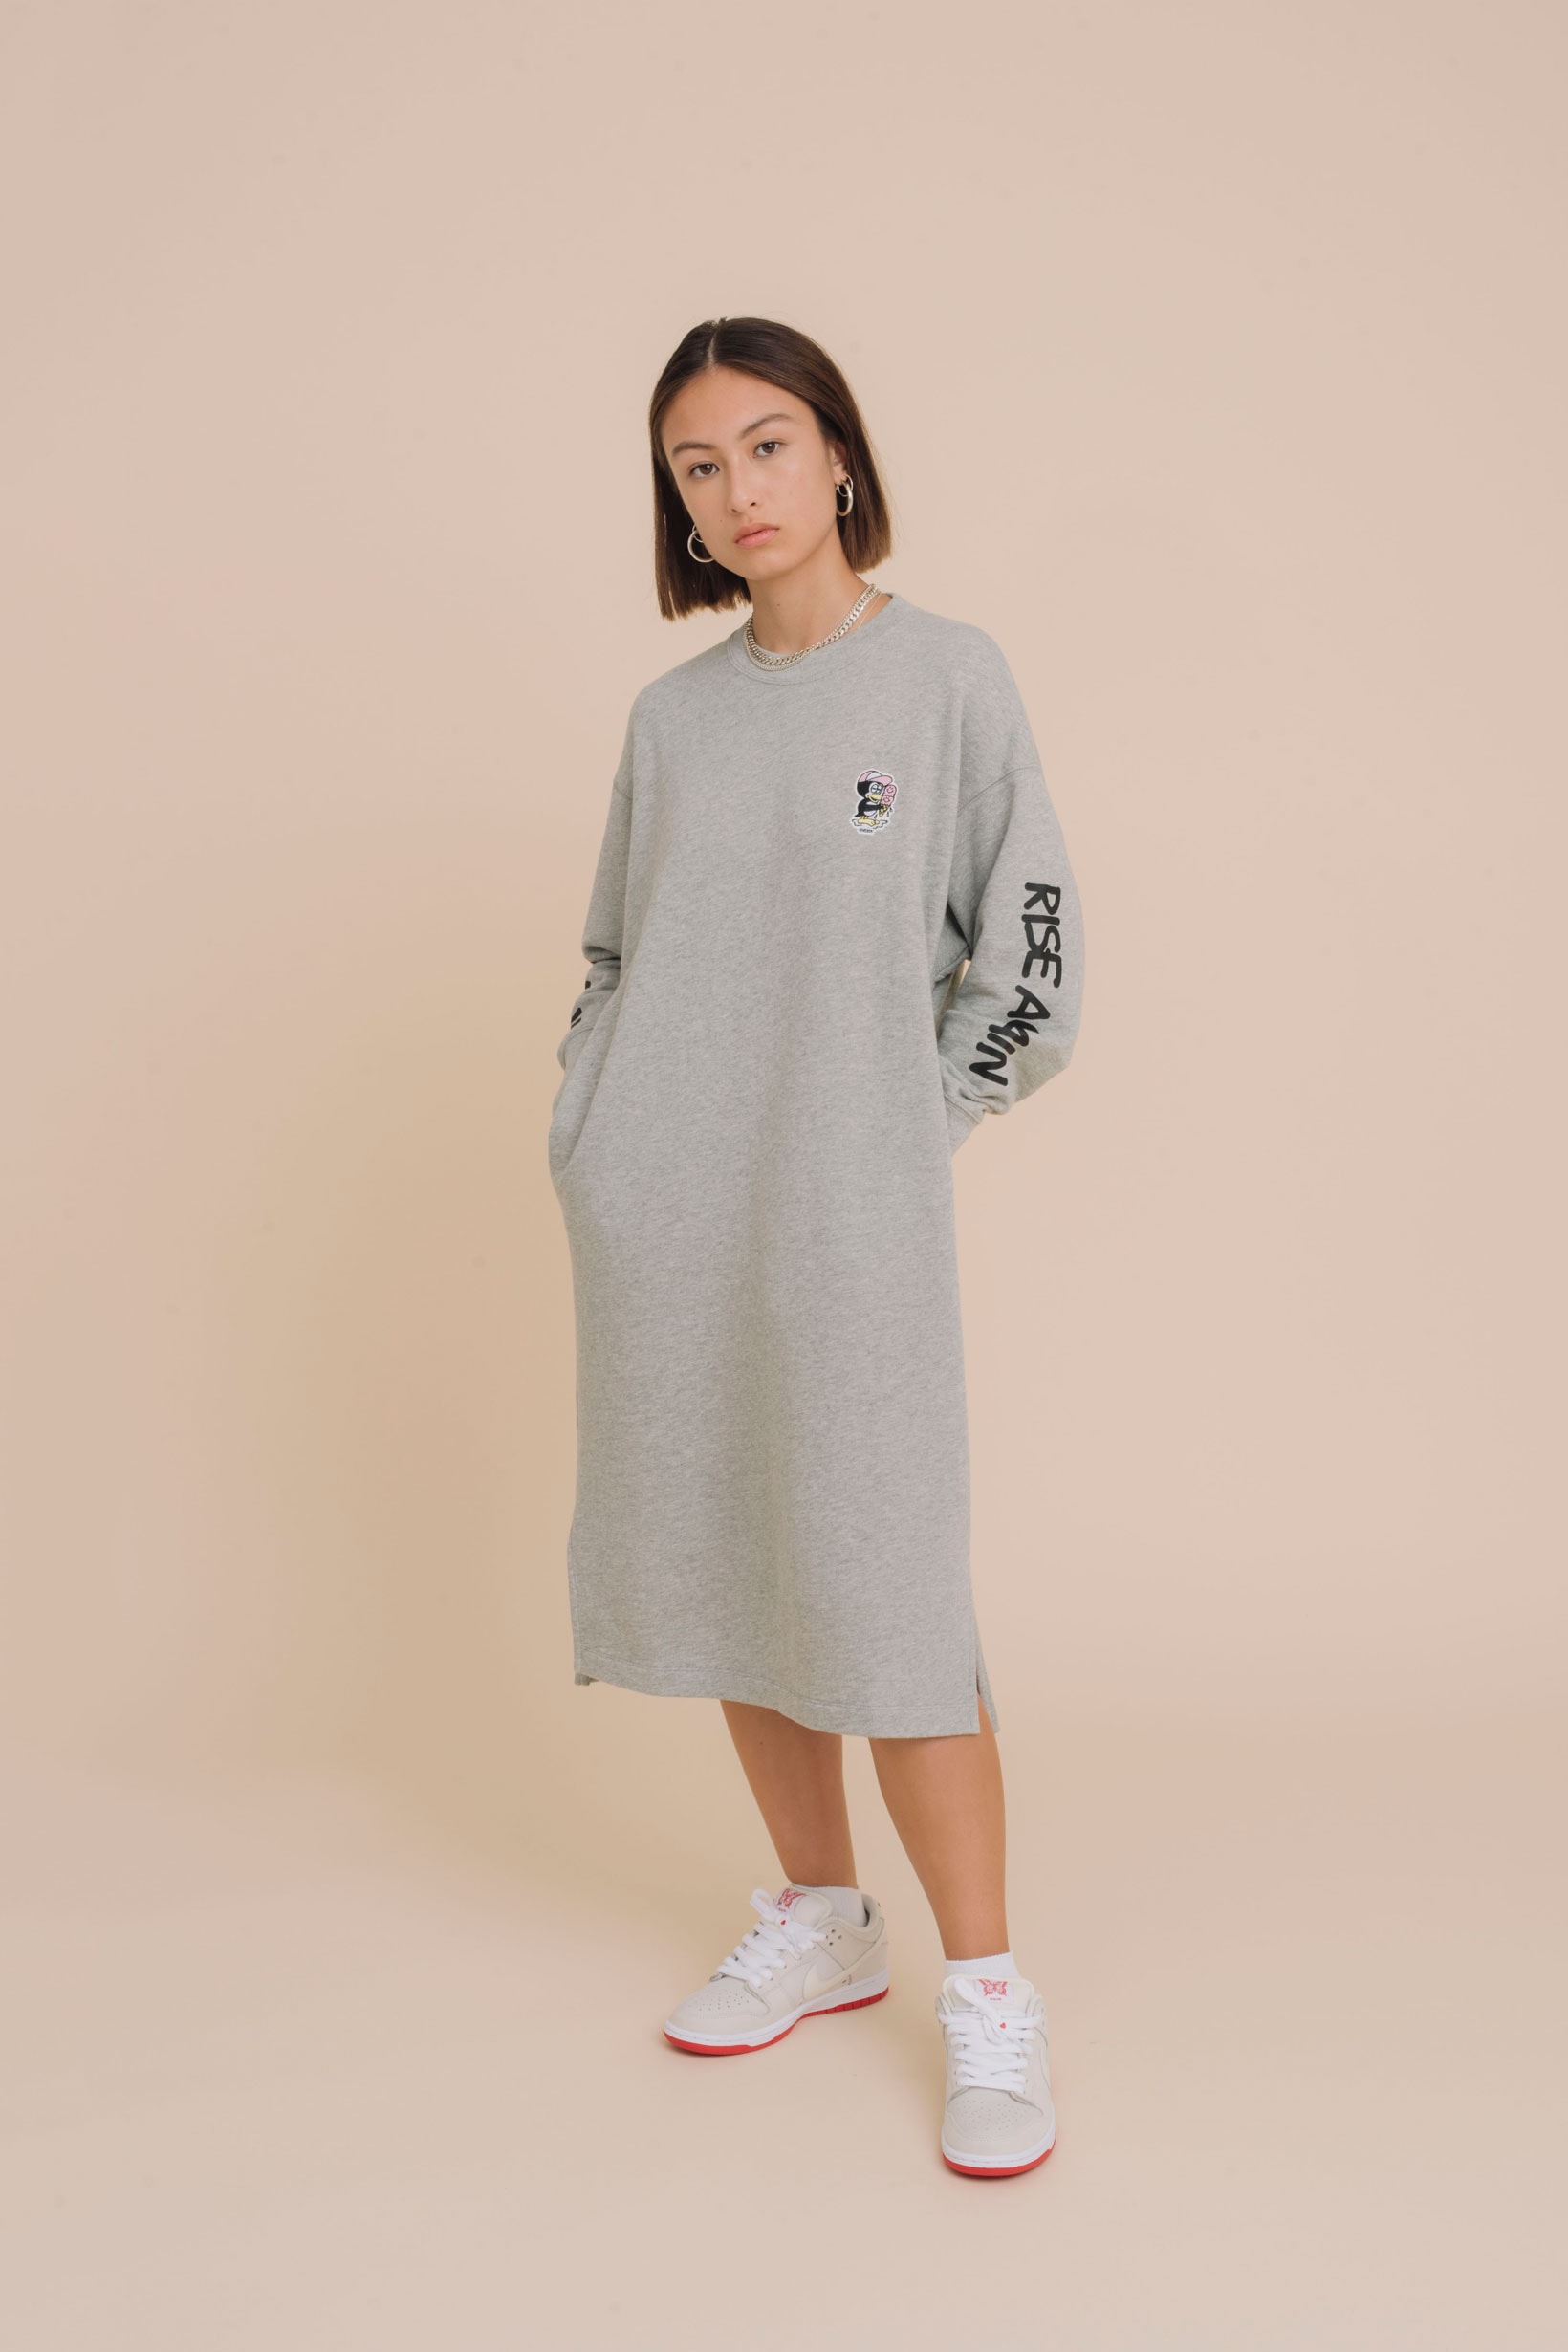 Verdy x Uniqlo UT Fall Winter 2019 Collection Sweater Dress Grey